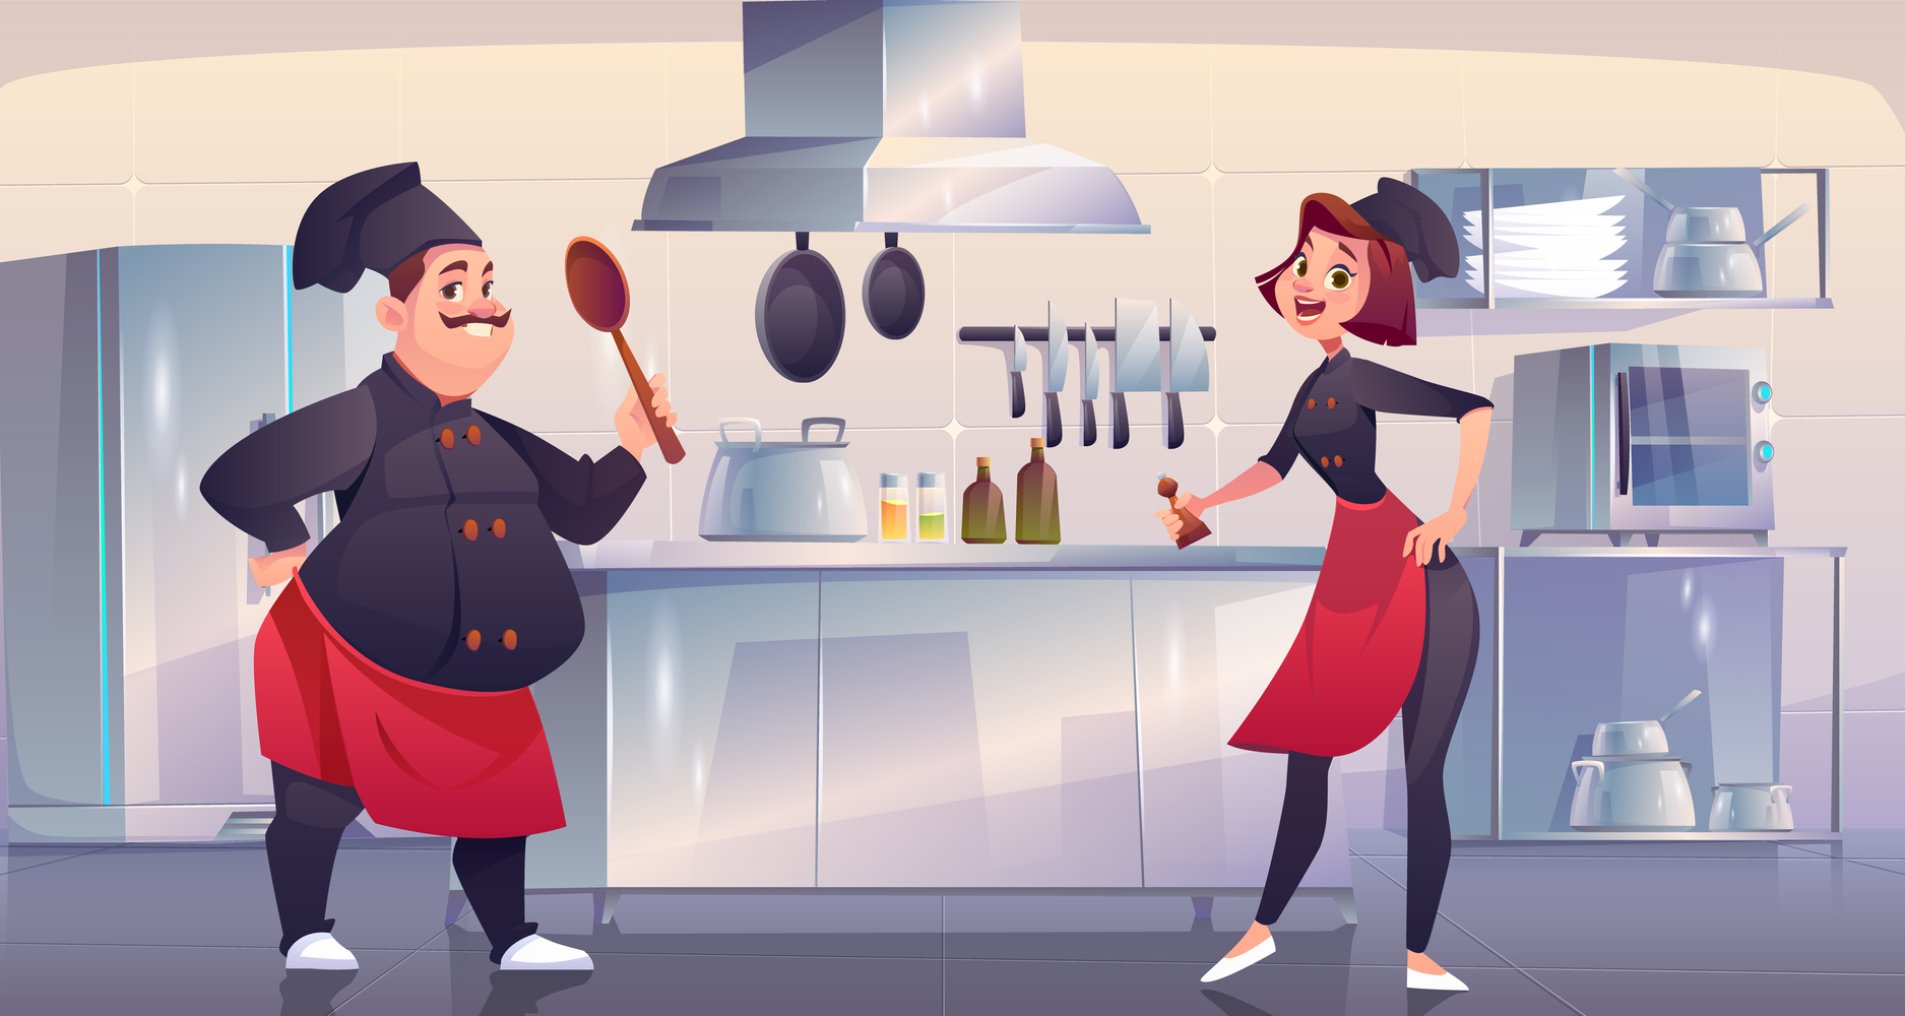 Иллюстрация шеф и сушеф на кухне